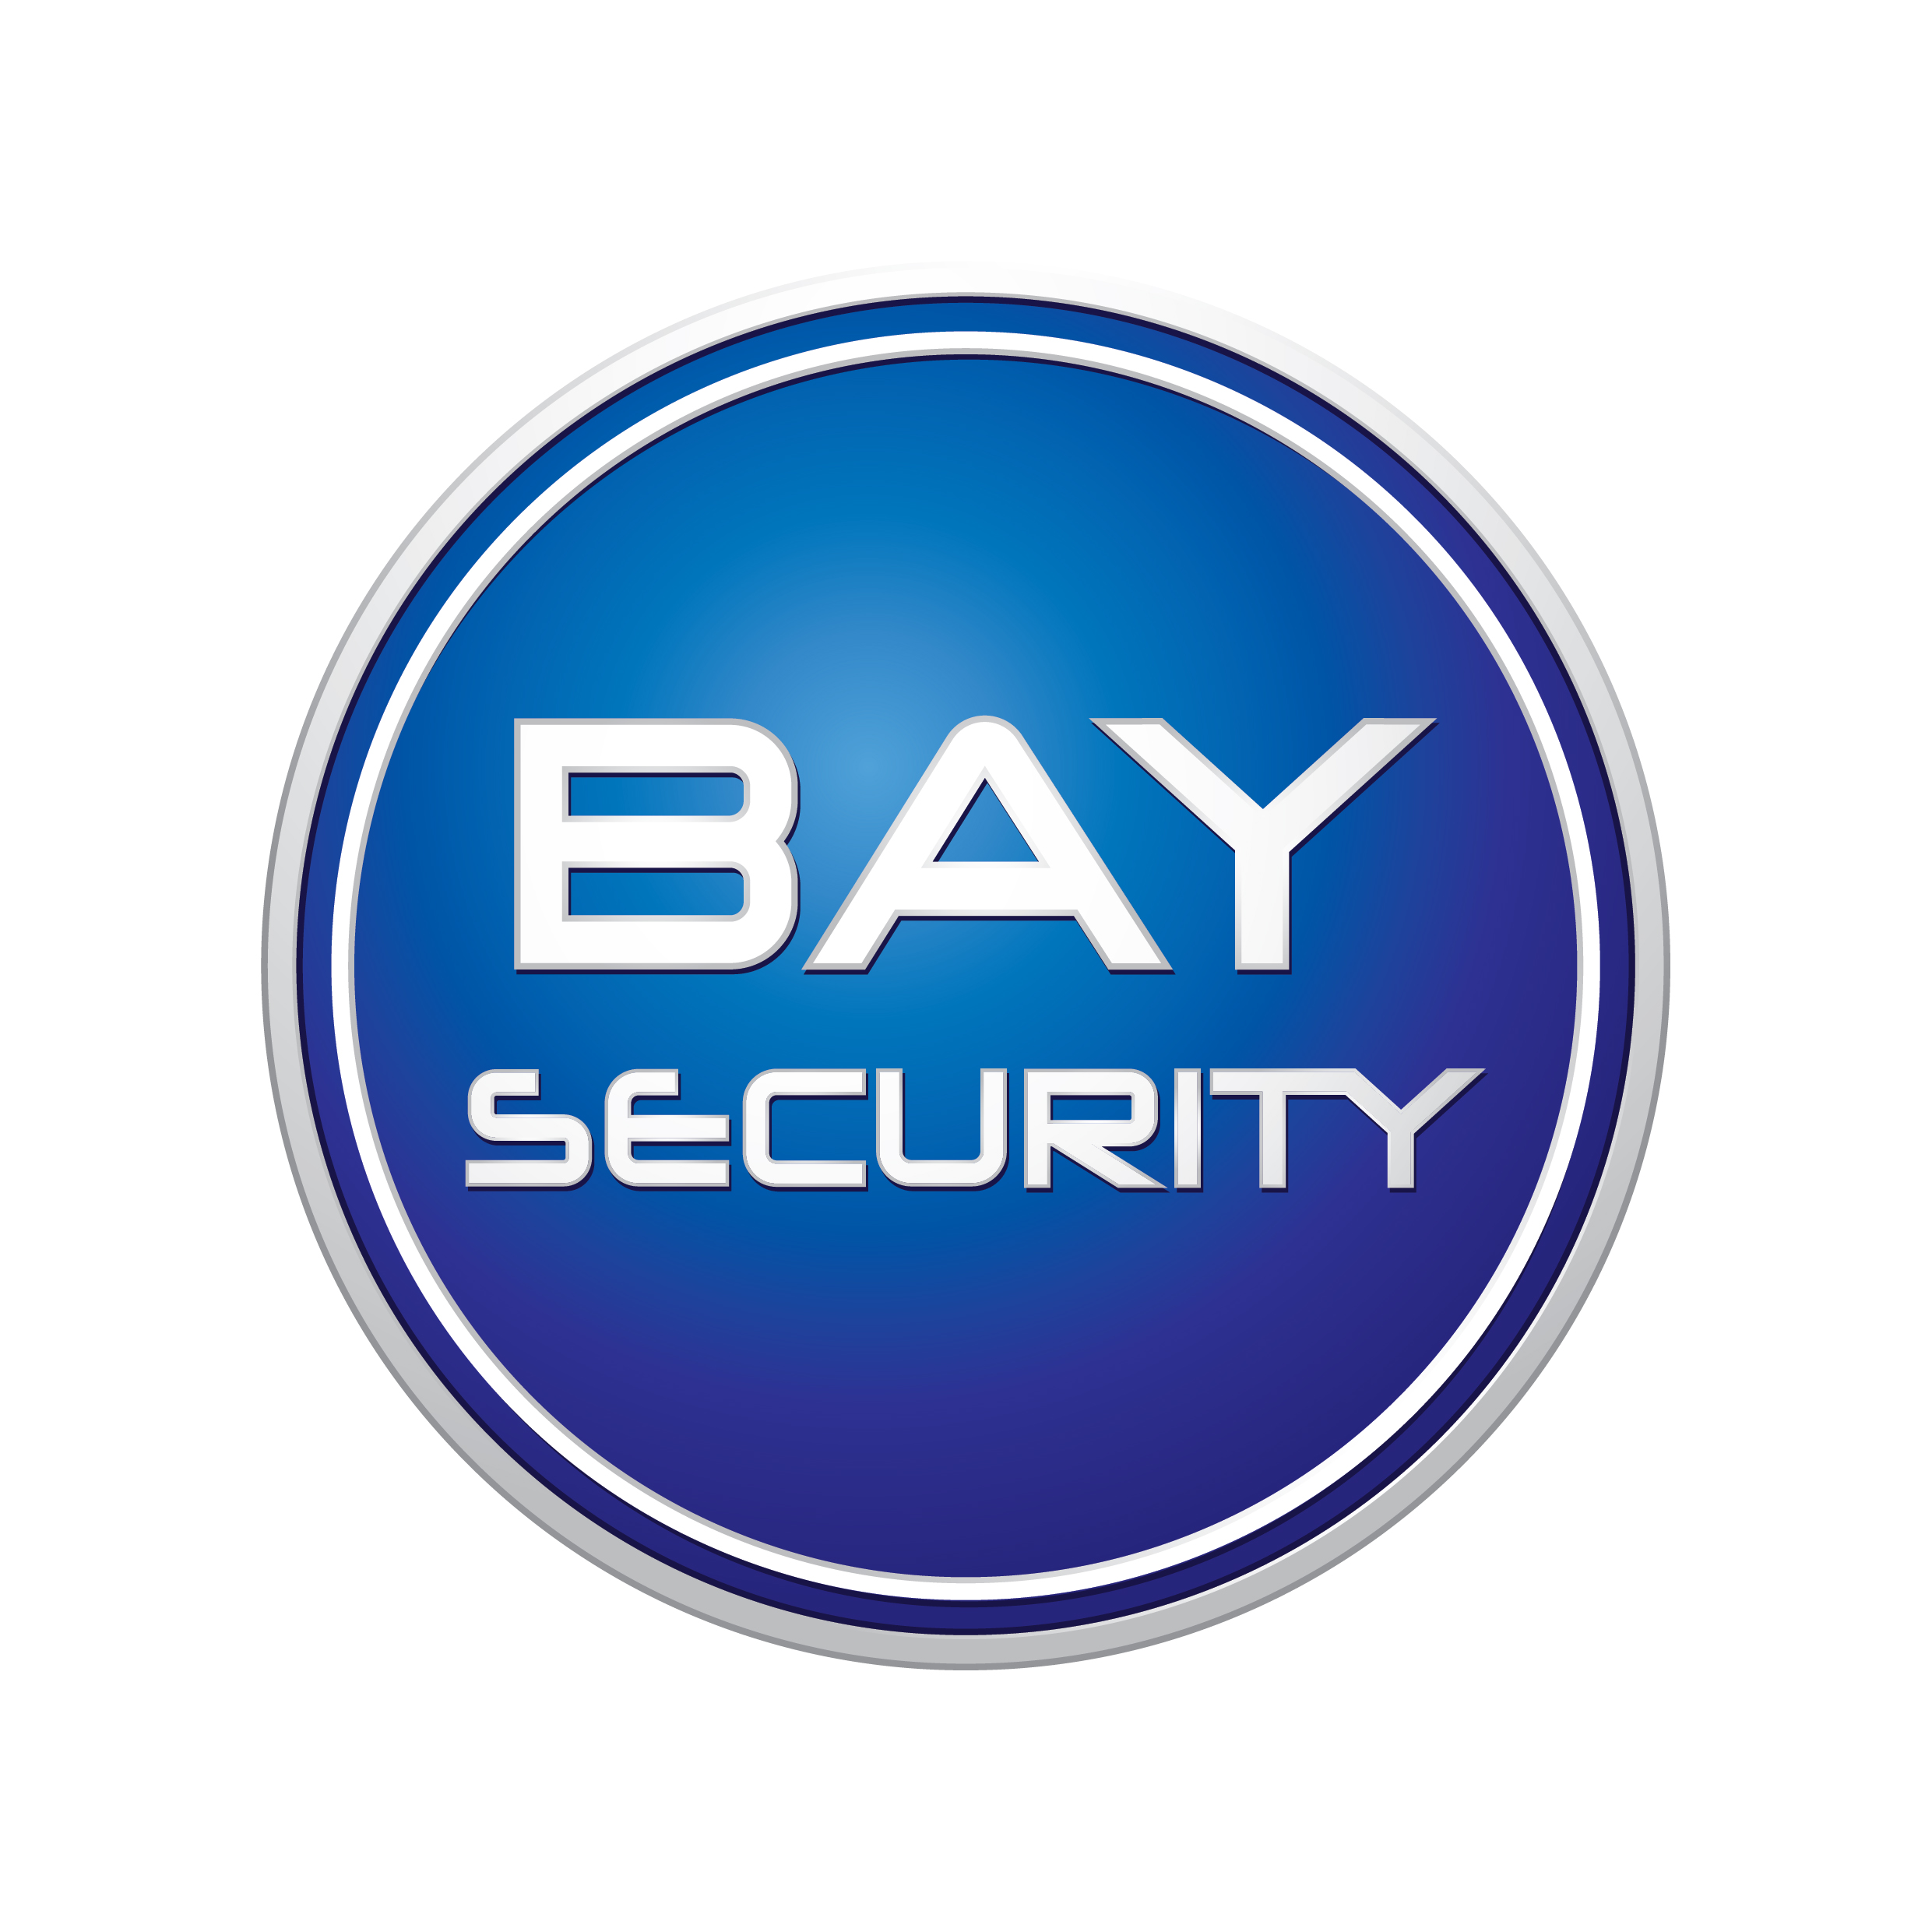 Bay security